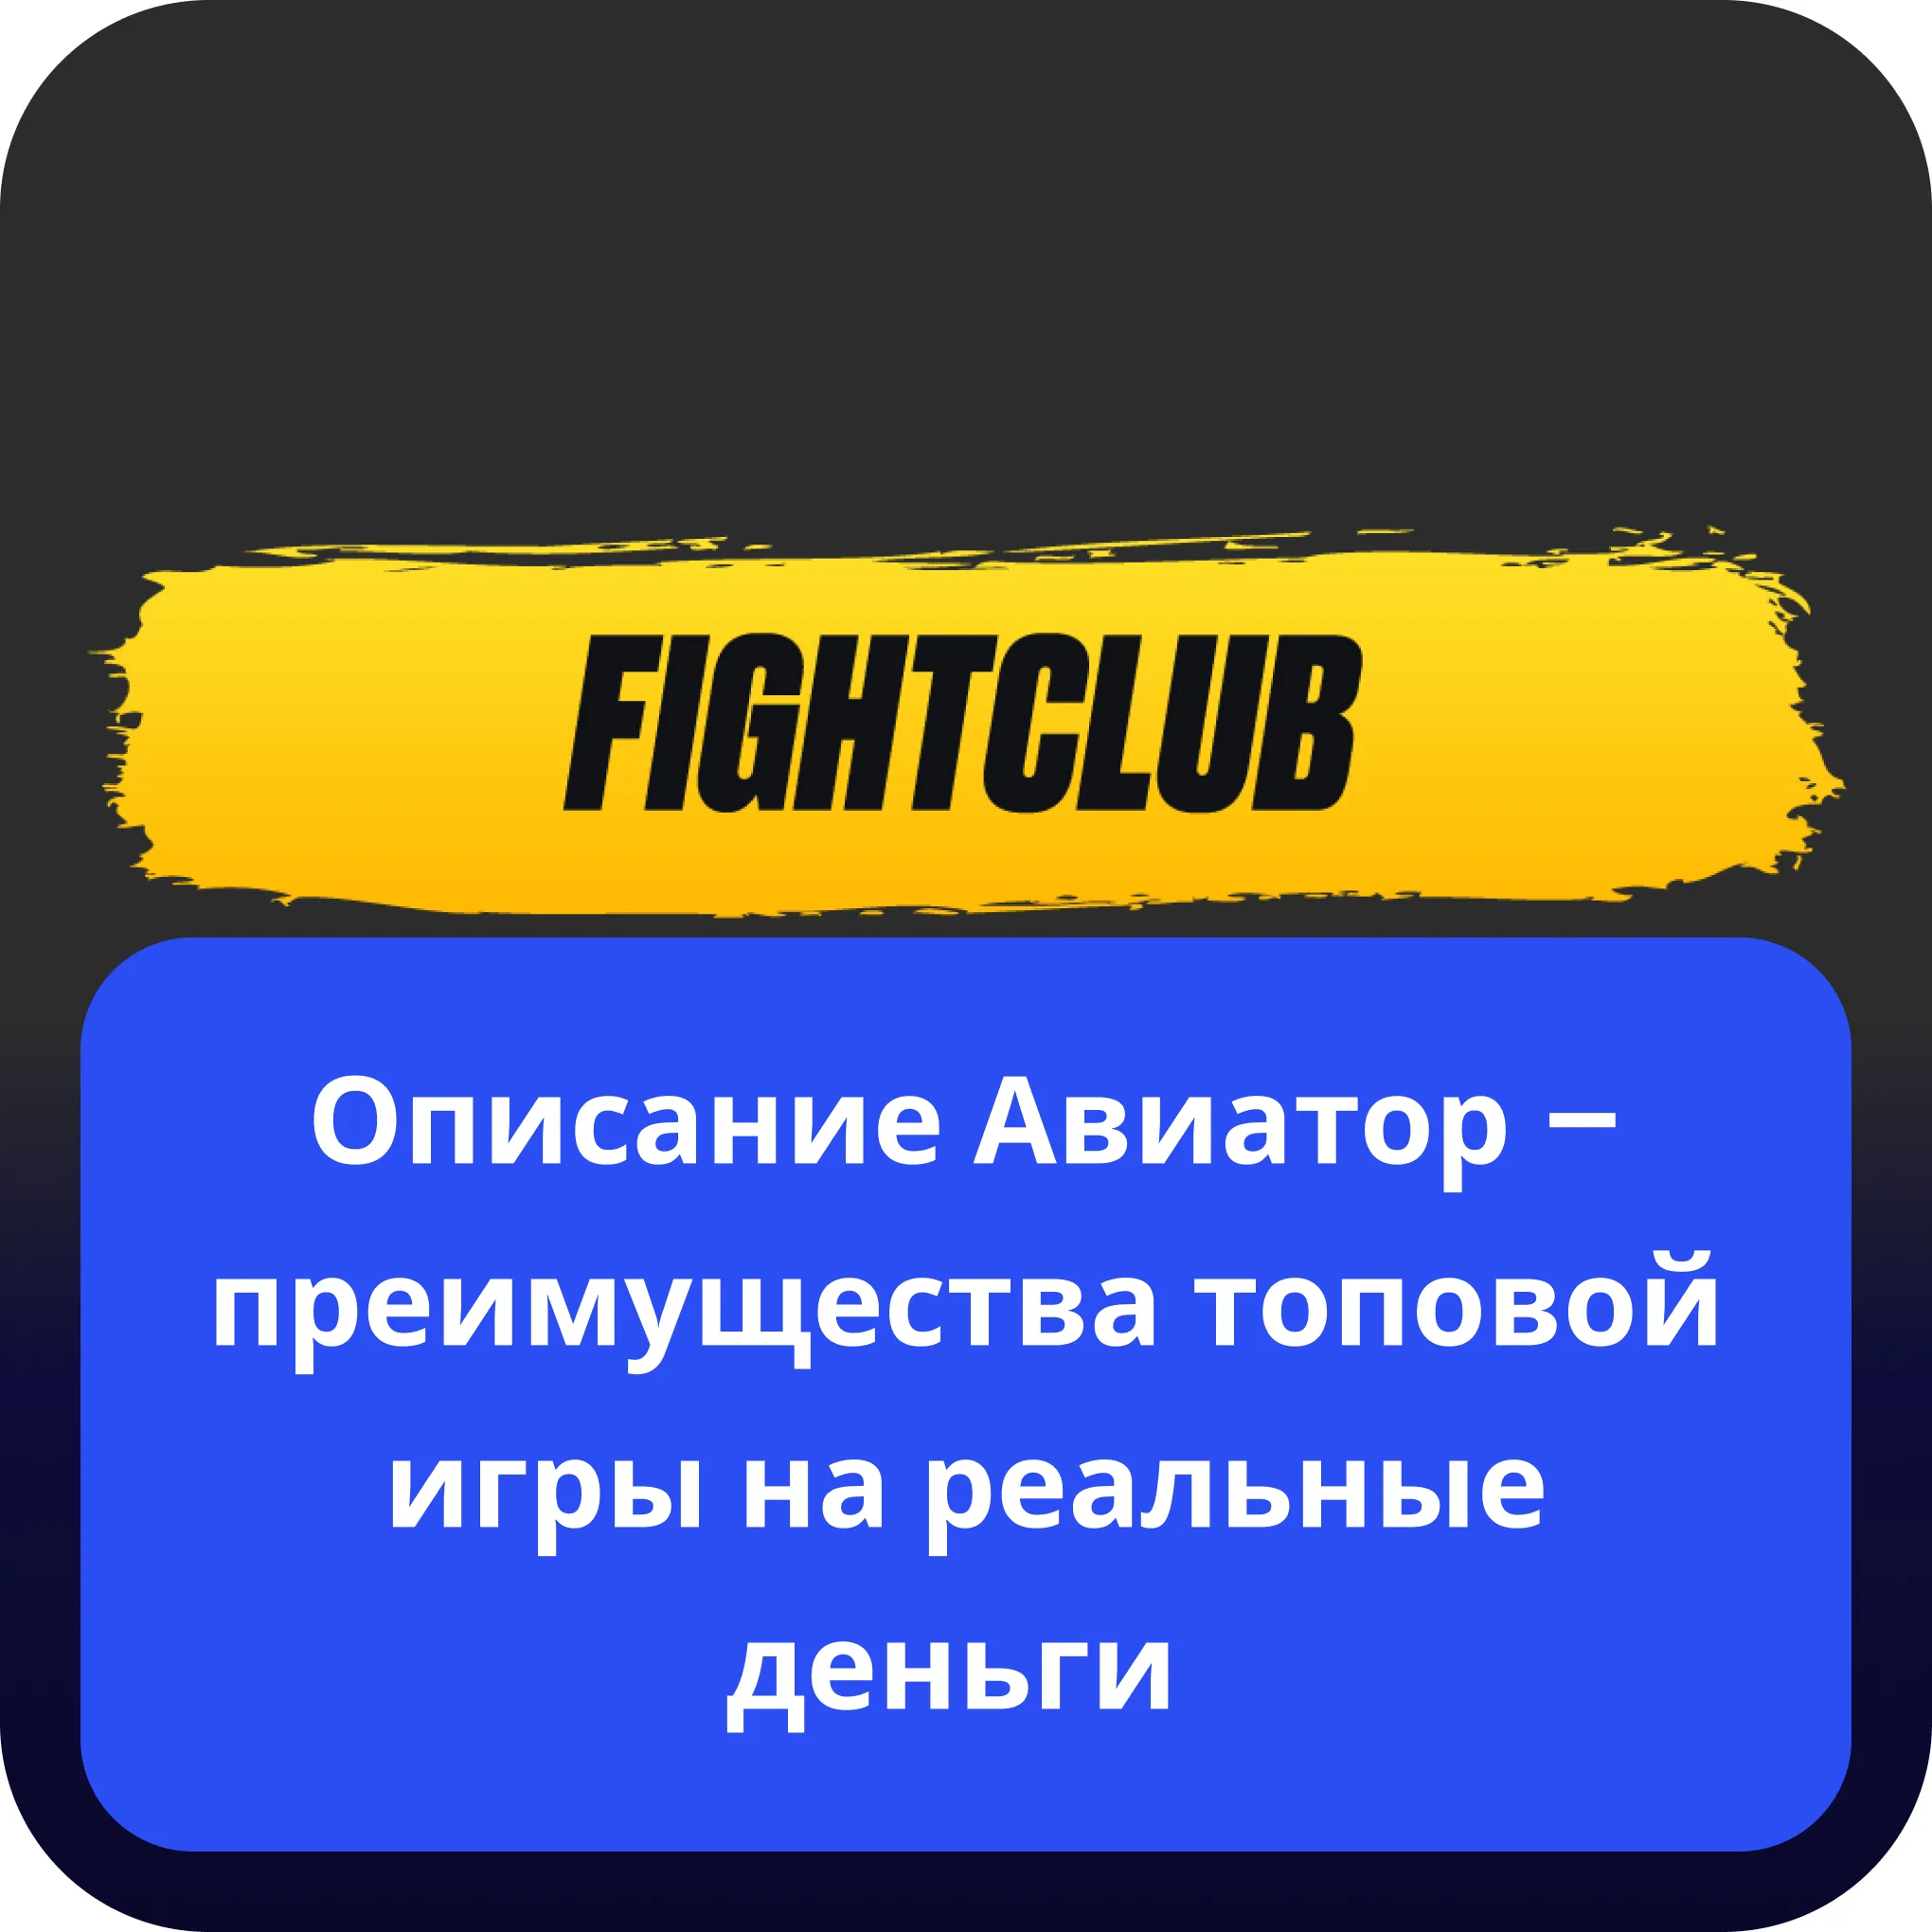 fight club casino авиатор описание